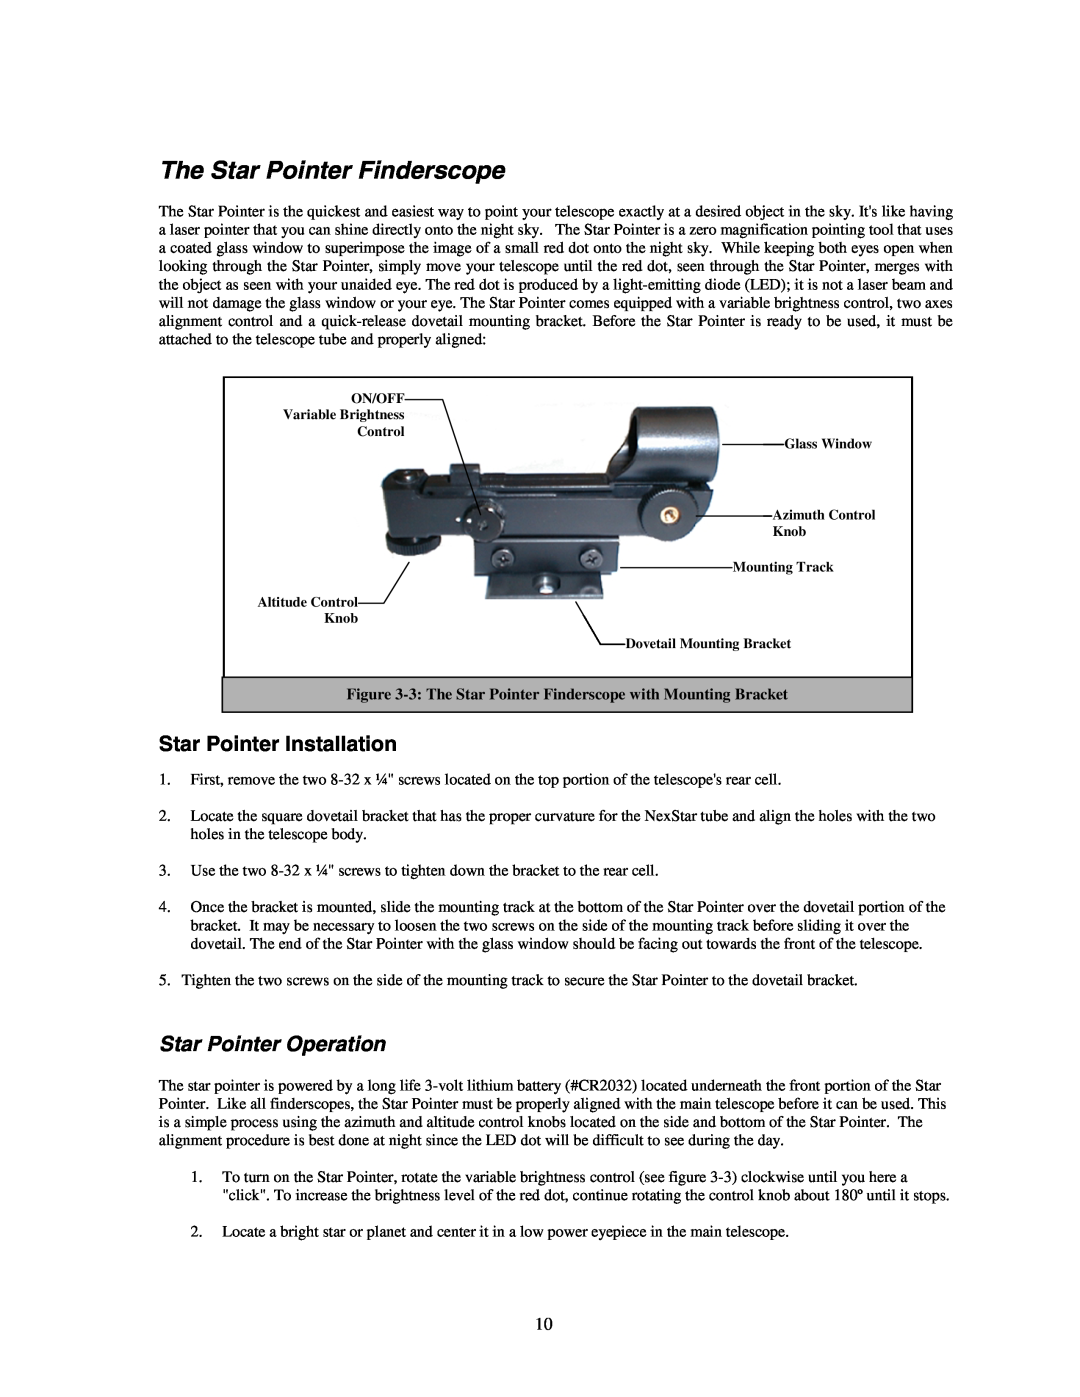 Celestron NexStar HC manual The Star Pointer Finderscope, Star Pointer Installation, Star Pointer Operation 